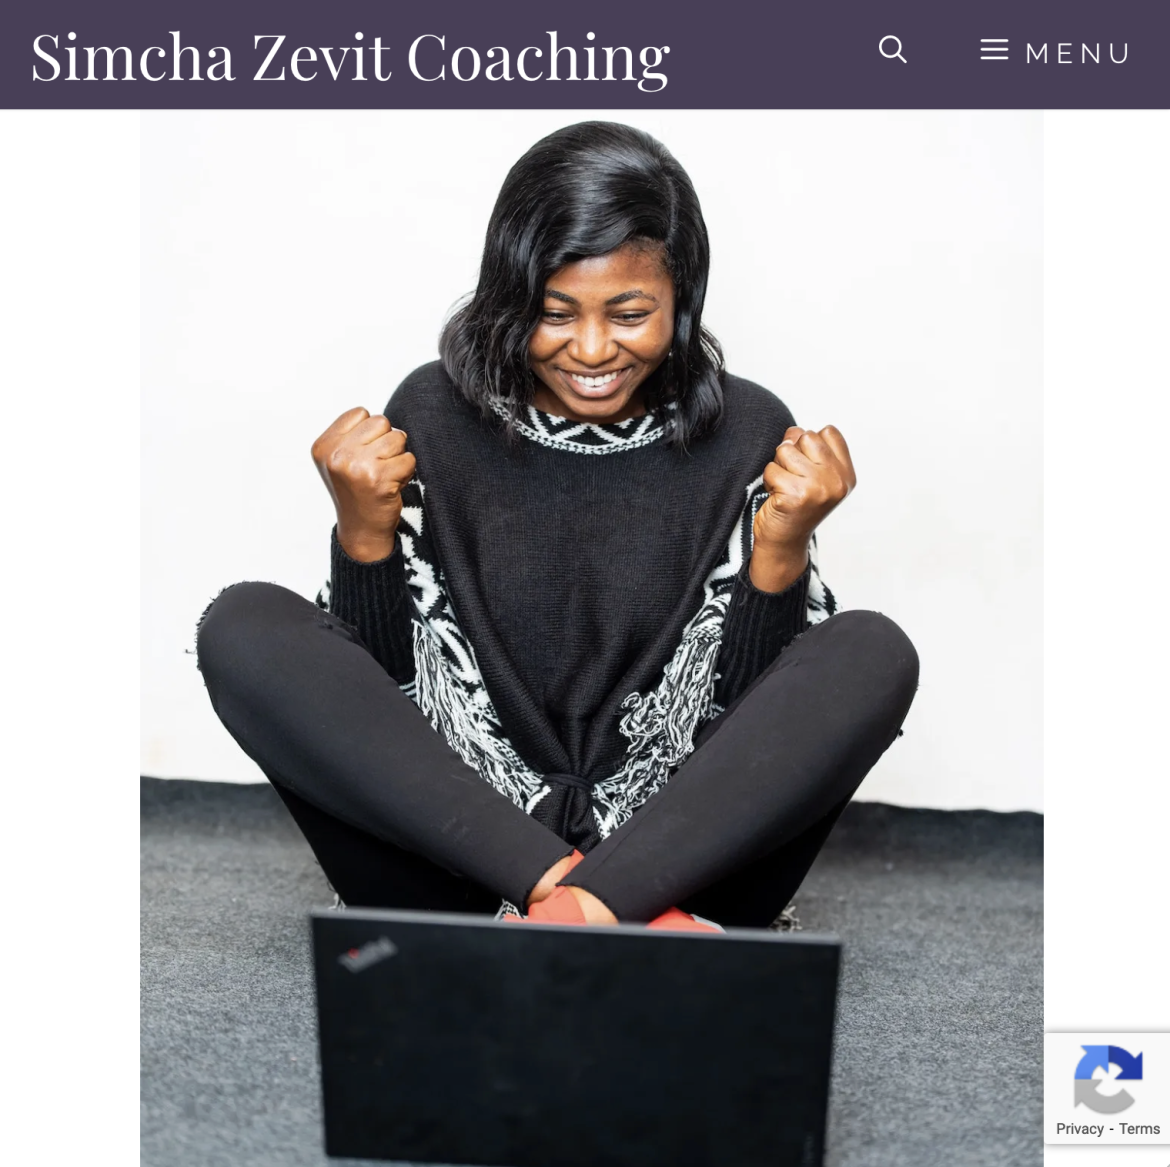 Simchat Zevit Coaching homepage image